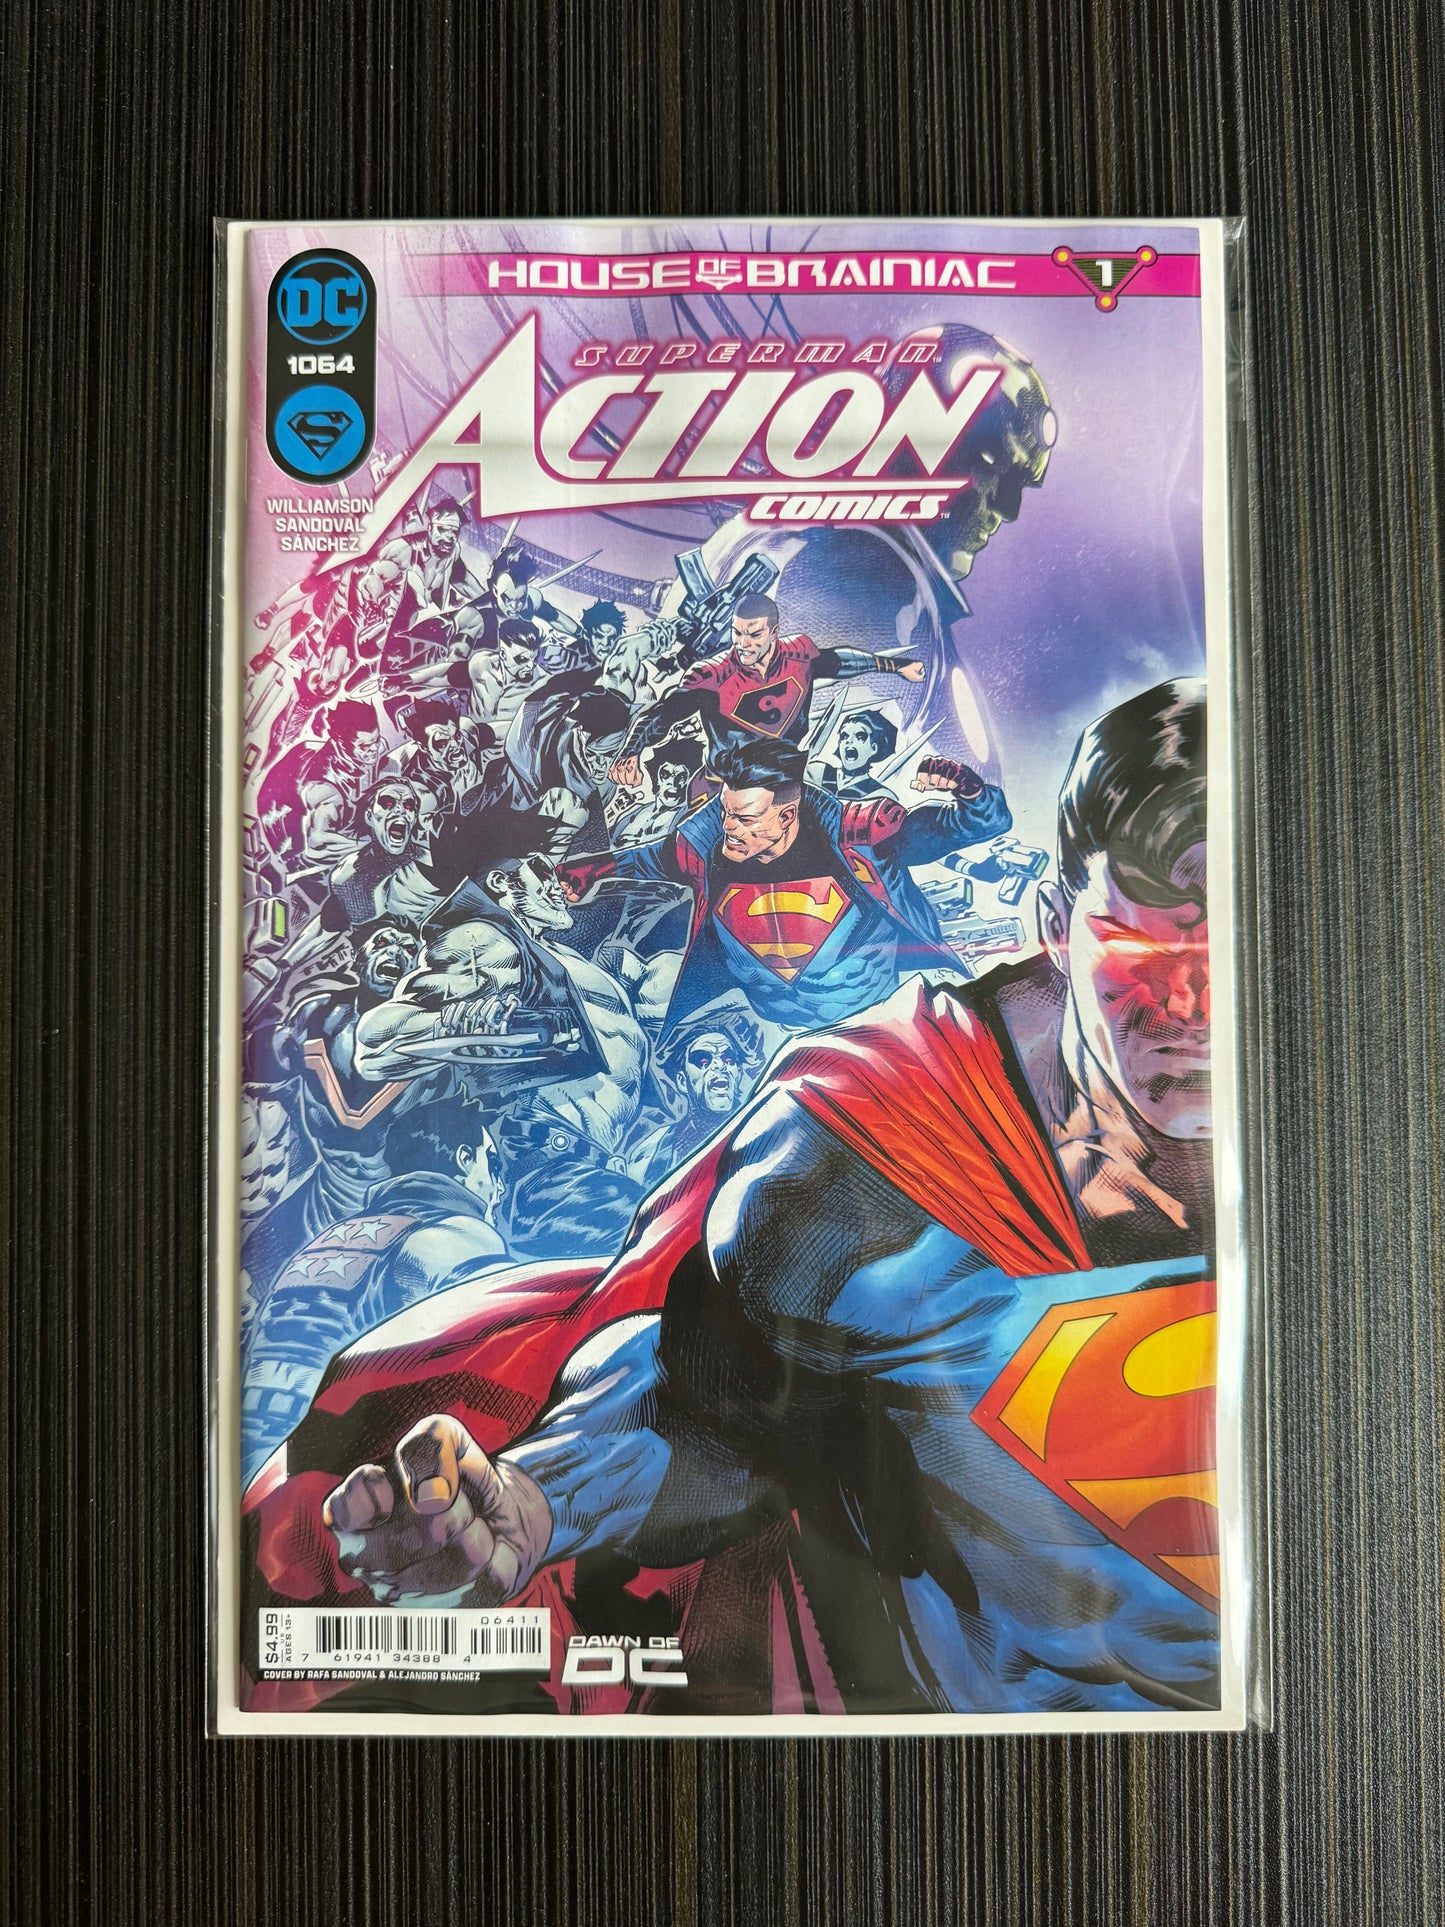 Action Comics #1064 Cover A Rafa Sandoval Connecting (House of Brainiac)